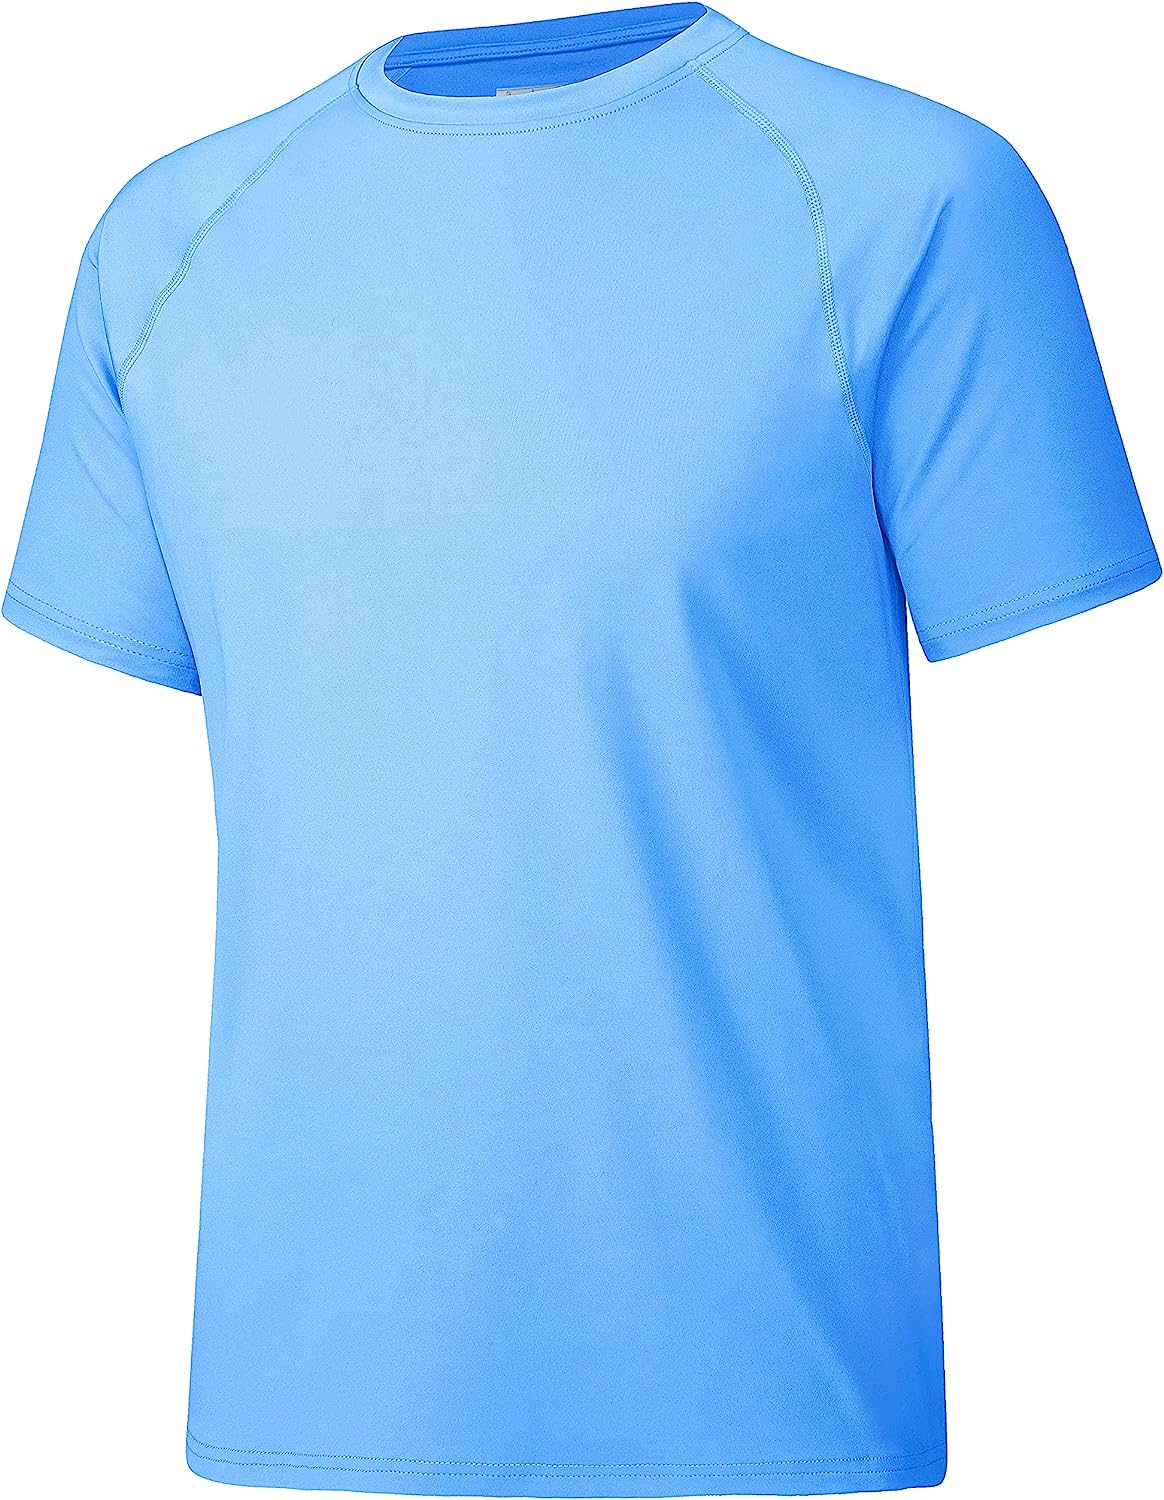 MAGCOMSEN Men's SPF Shirts Short Sleeve Shirts UPF 50+ Quick Dry Rashguard  Worko